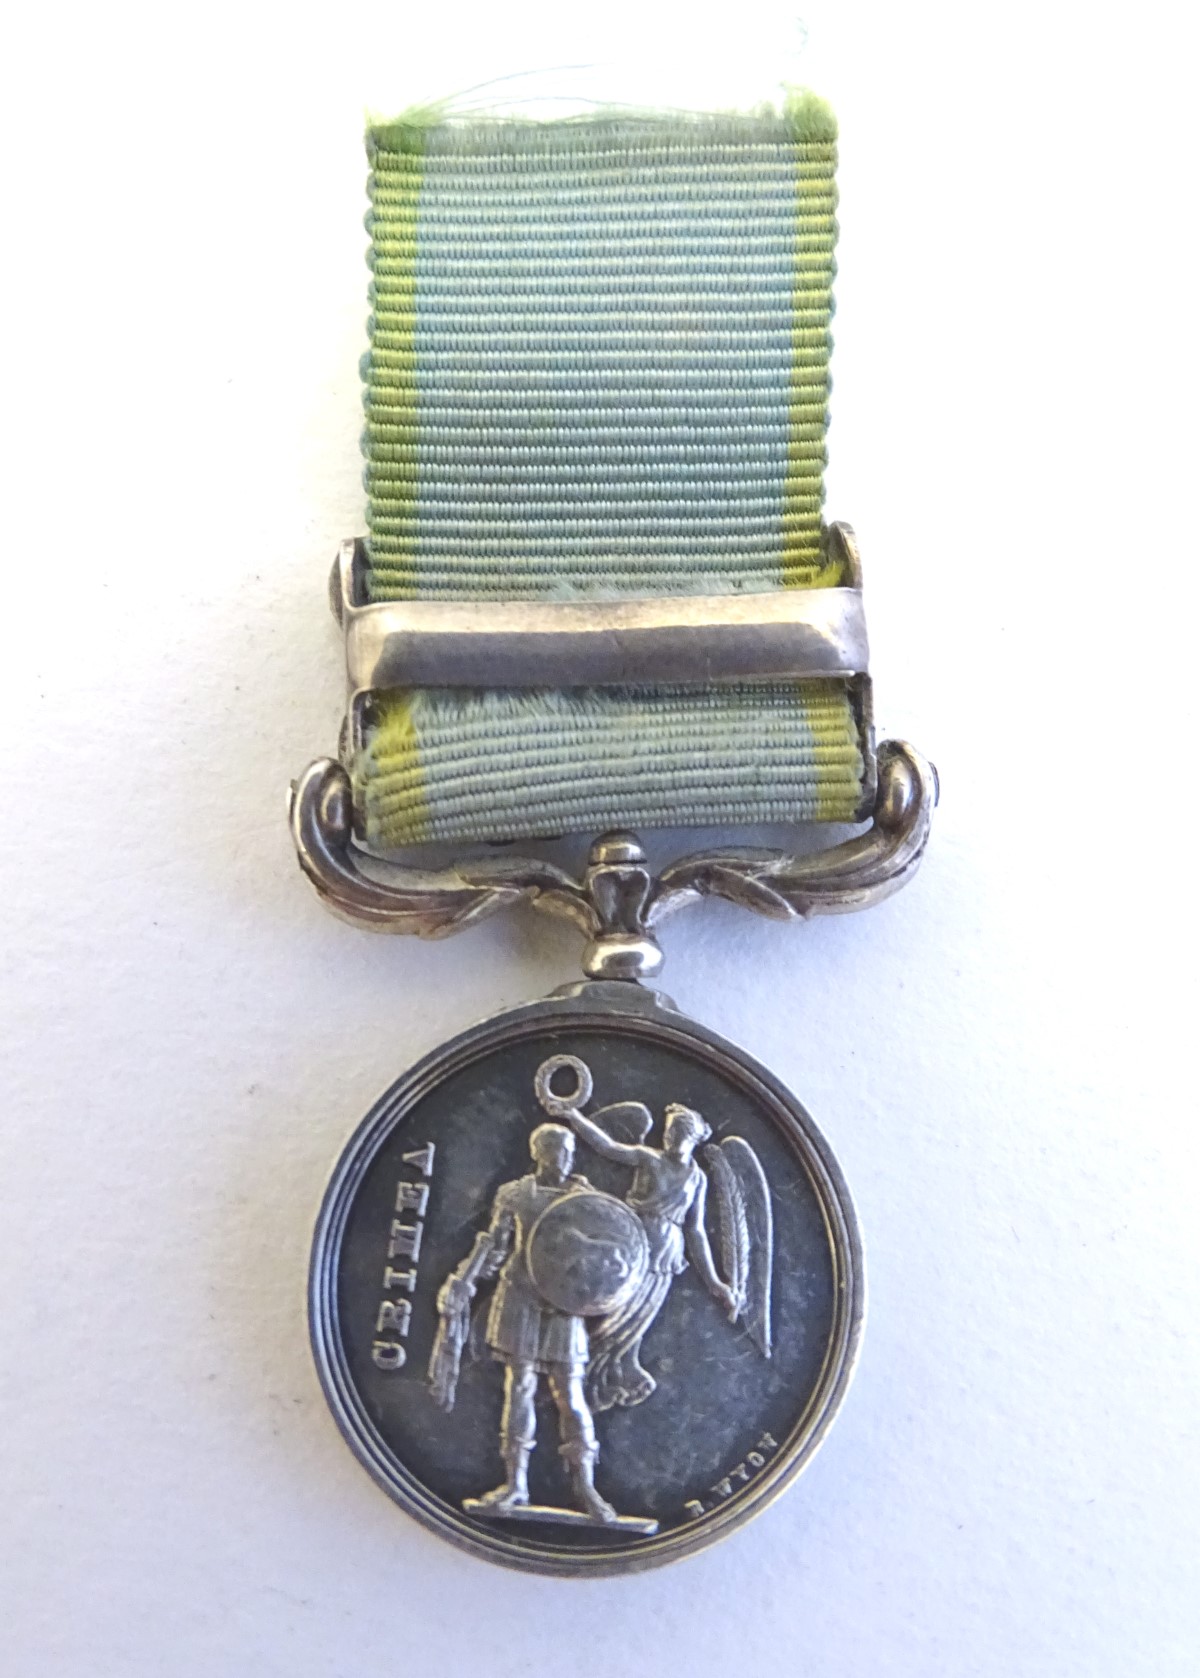 Militaria: a Victorian miniature Crimea Medal, with Sebastopol and Inkermann bars. 2" long ( - Image 5 of 7